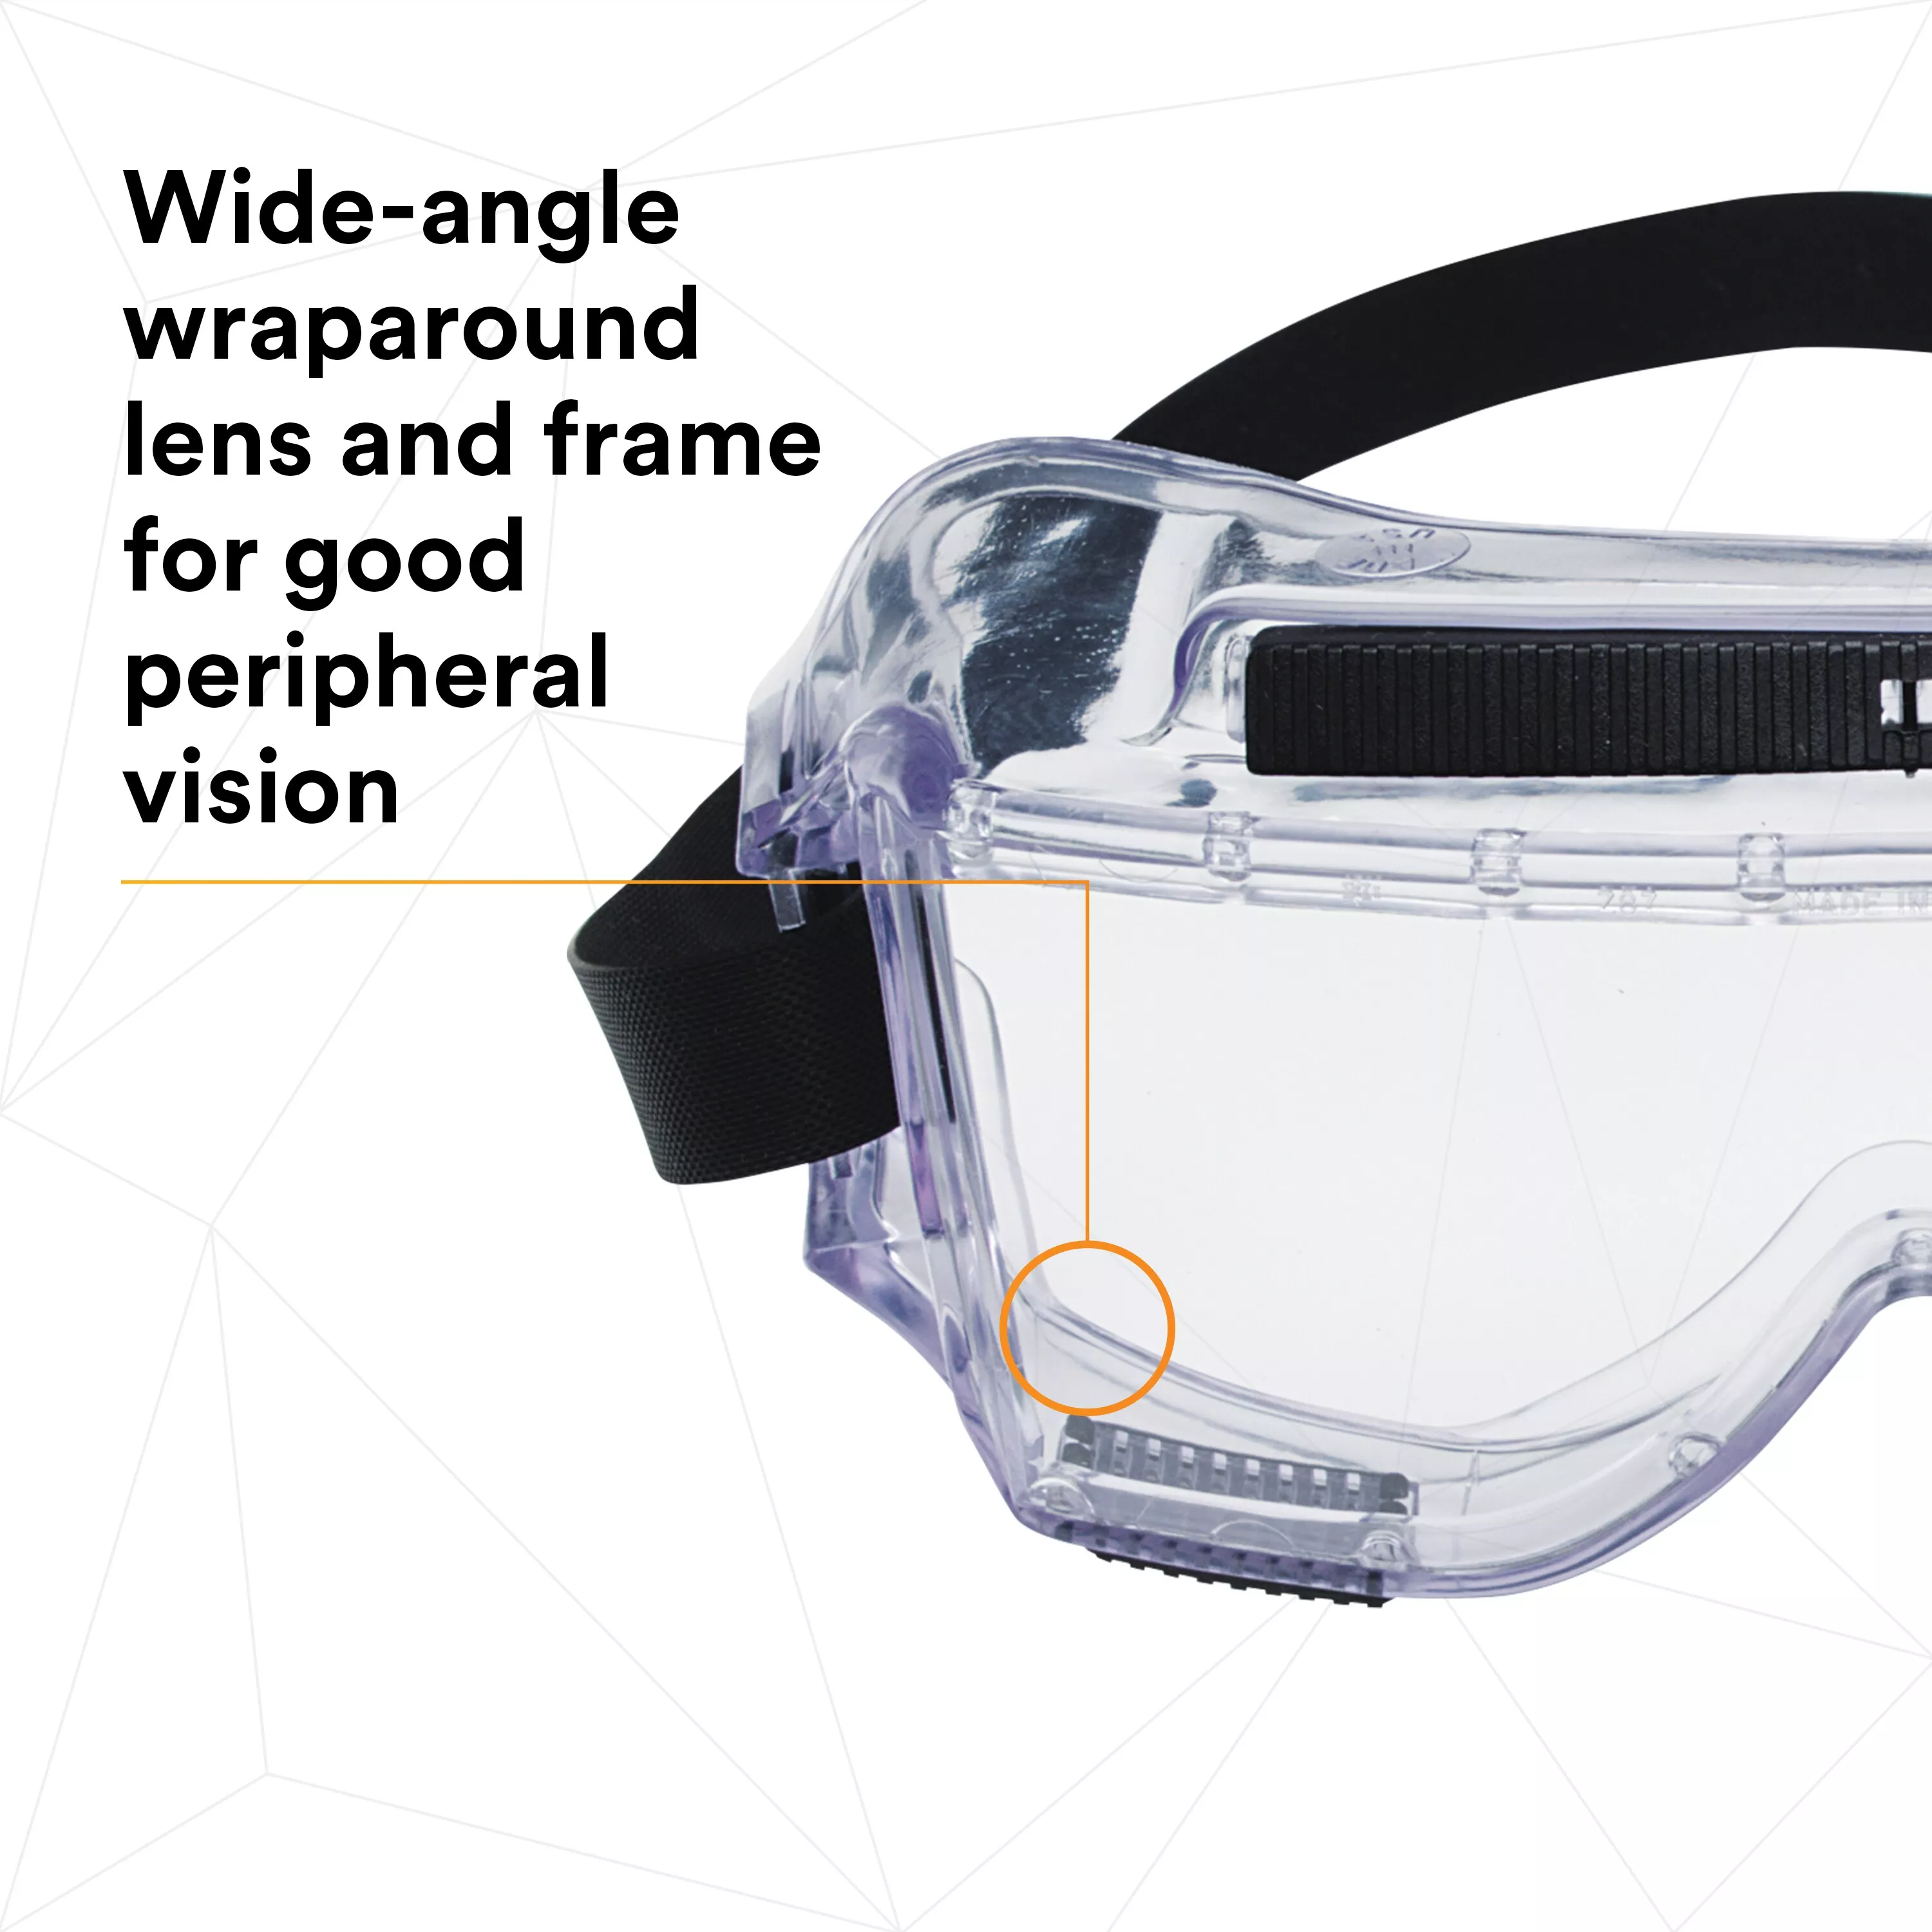 SKU 7000127565 | 3M™ Centurion™ Splash Safety Goggles 454